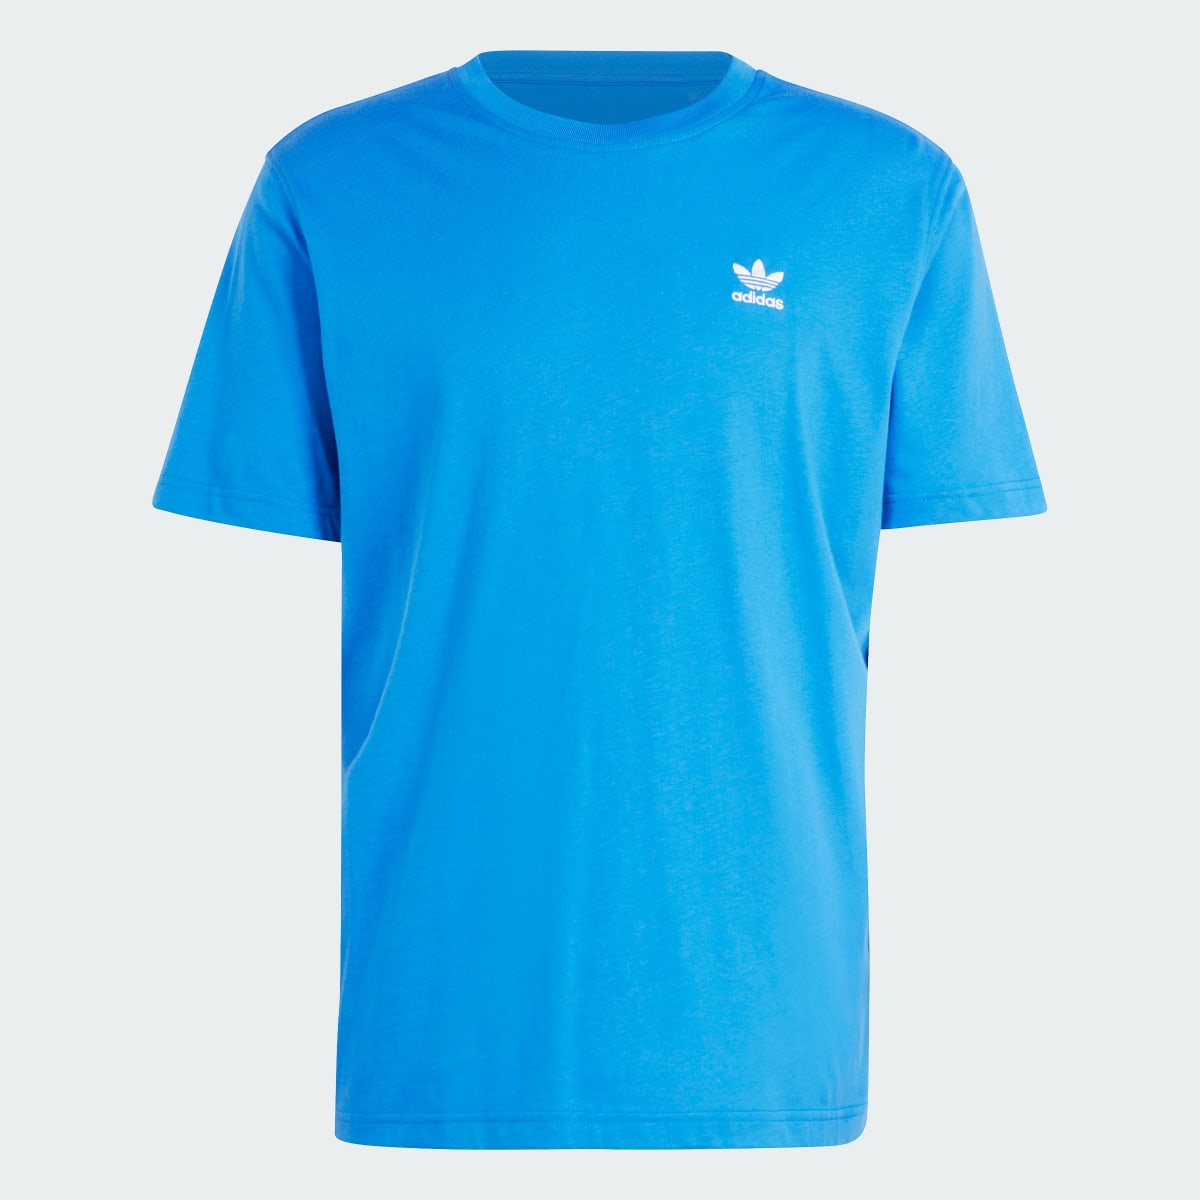 Adidas Trefoil Essentials T-Shirt. 5